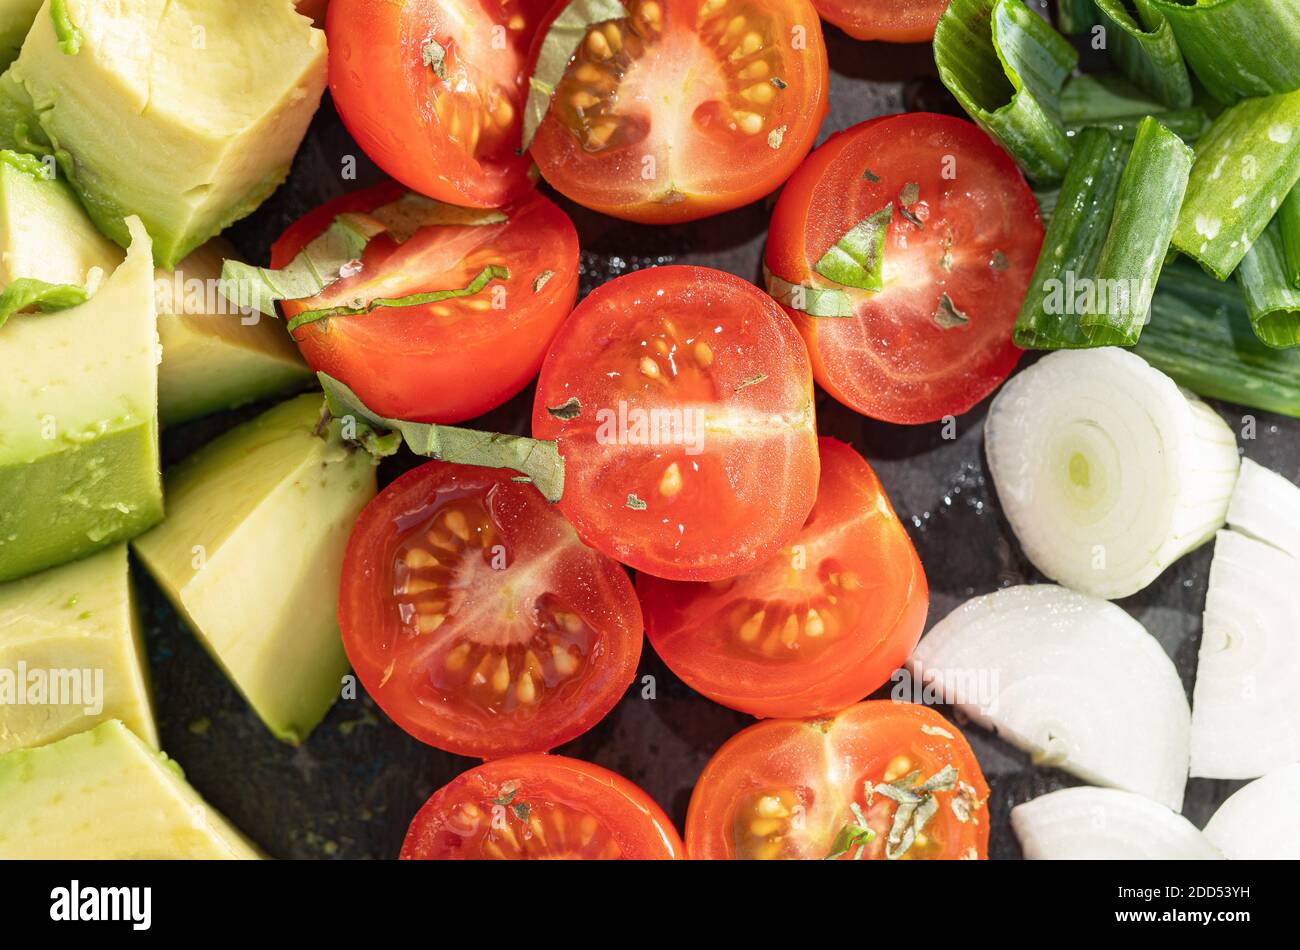 Salad - avocado, spring onion and tomato stock photo. Top View Stock Photo